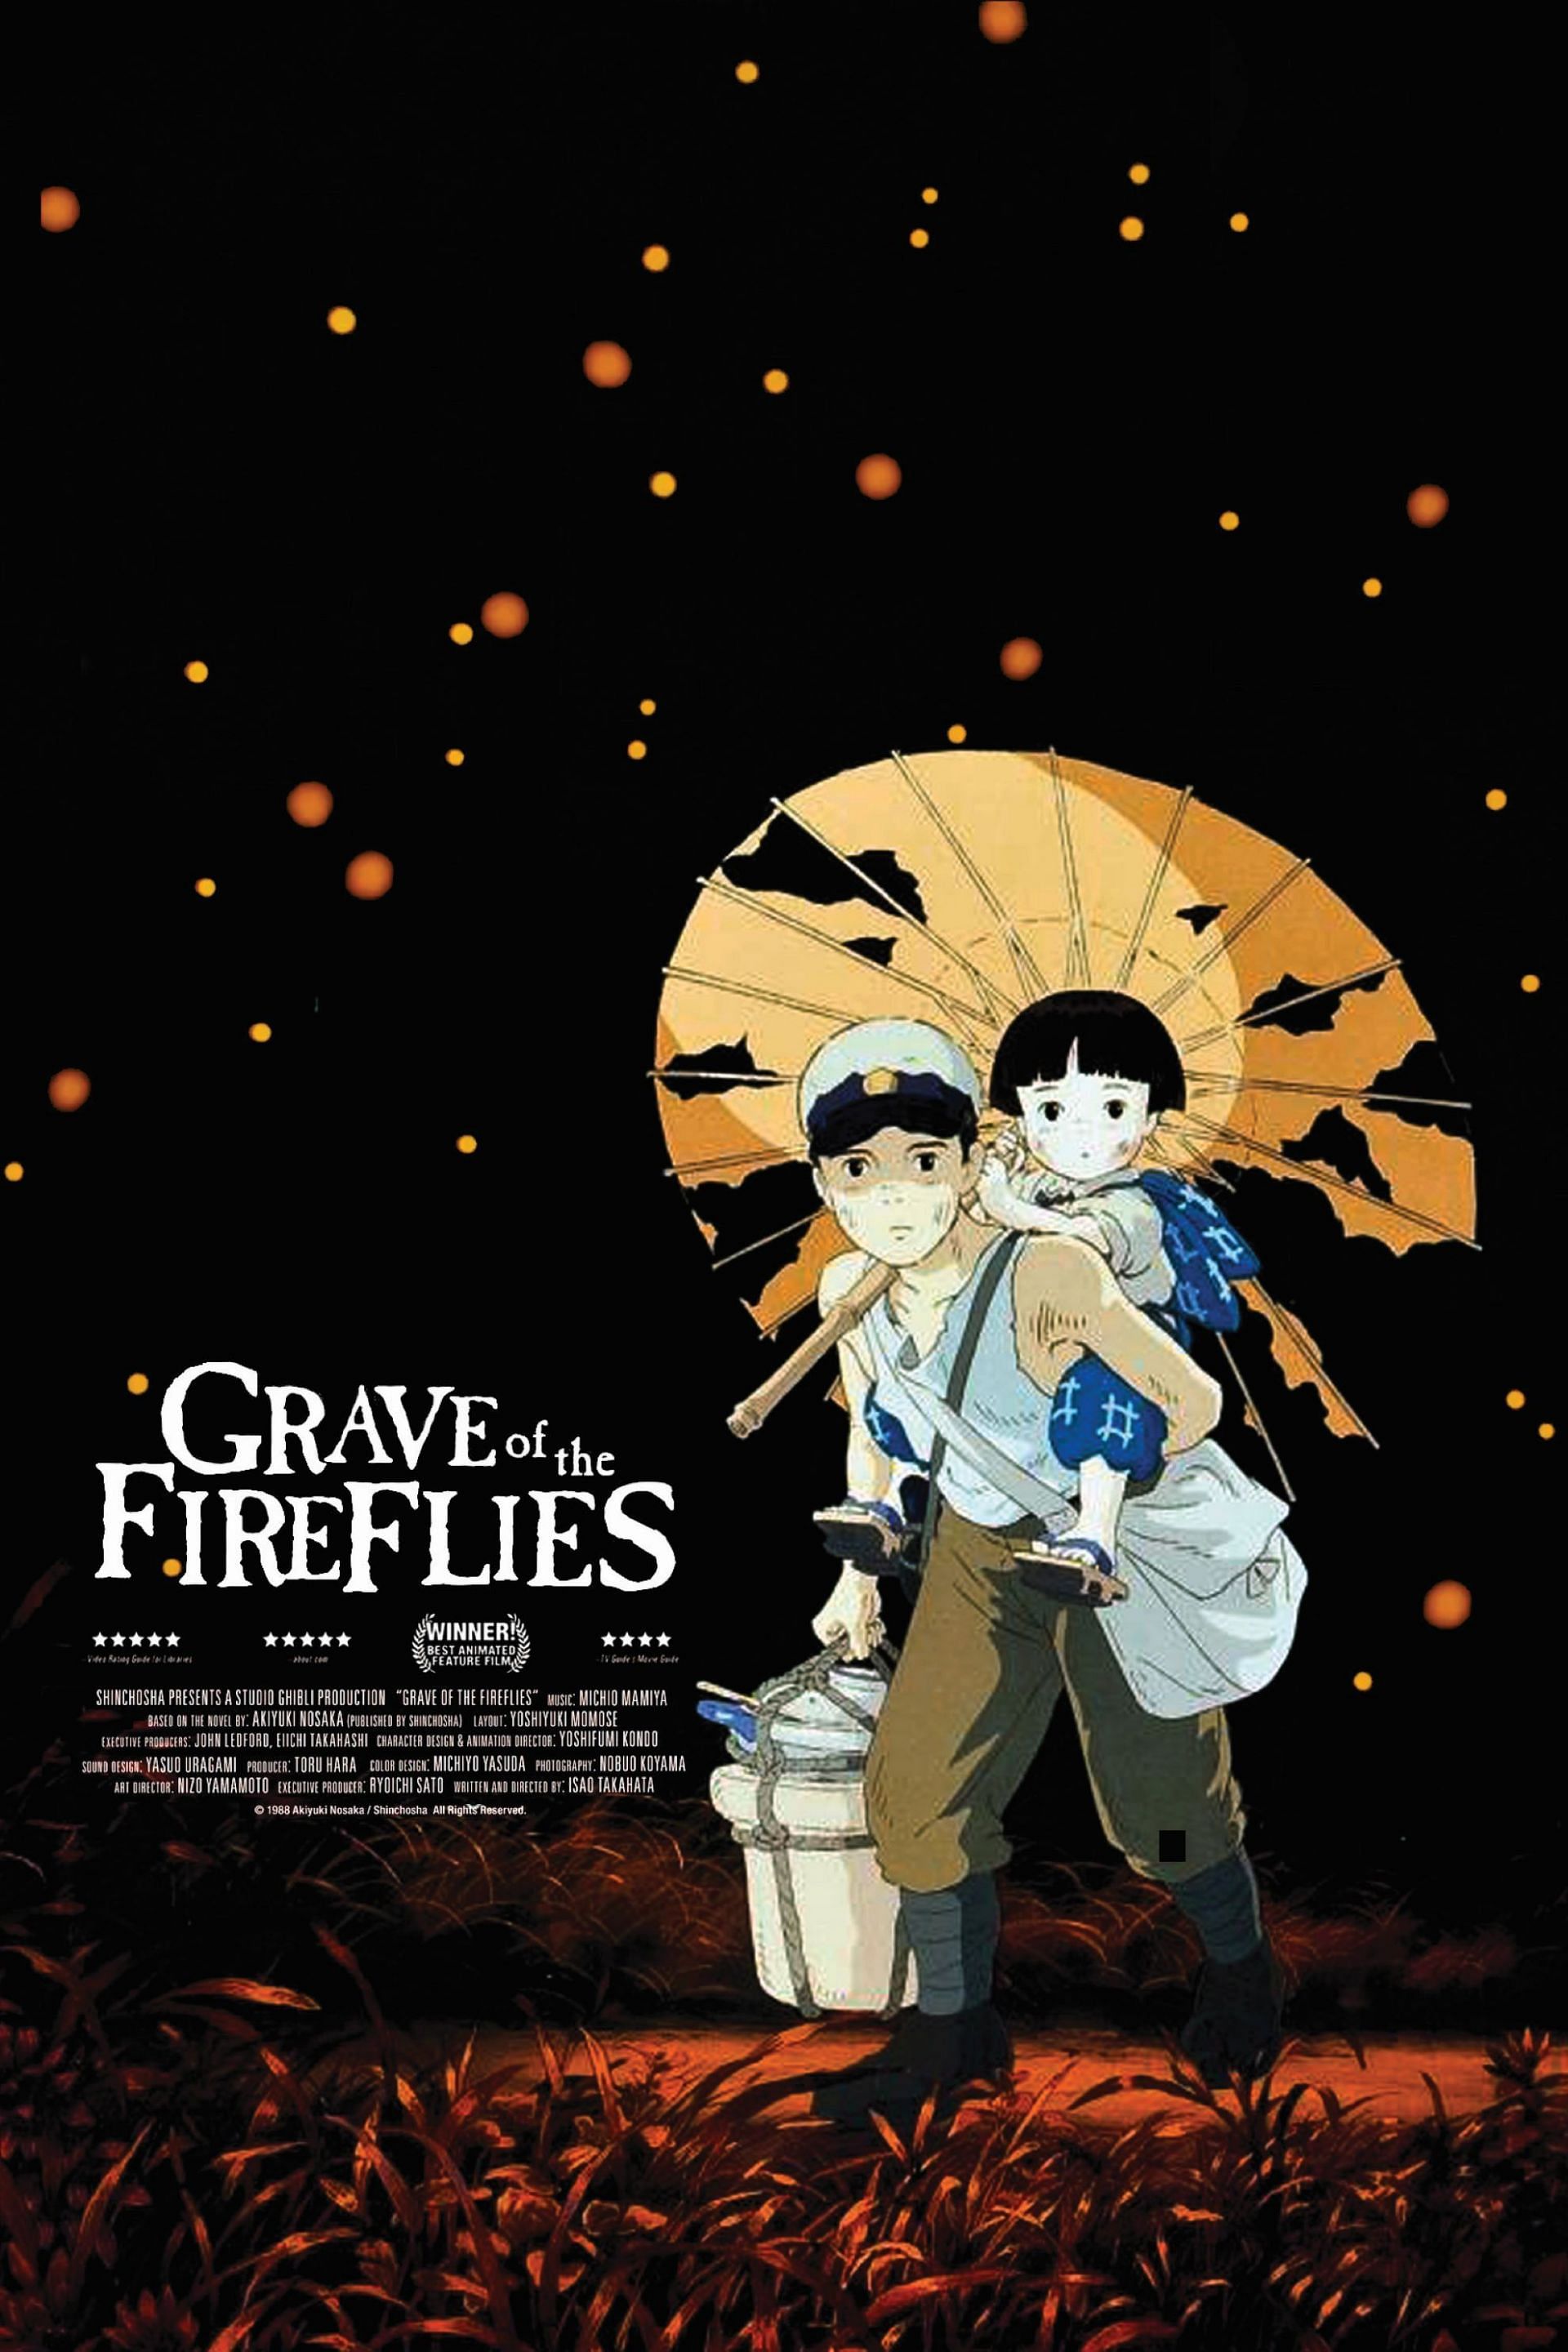 Grave of the Fireflies poster (Image via Studio Ghibli)